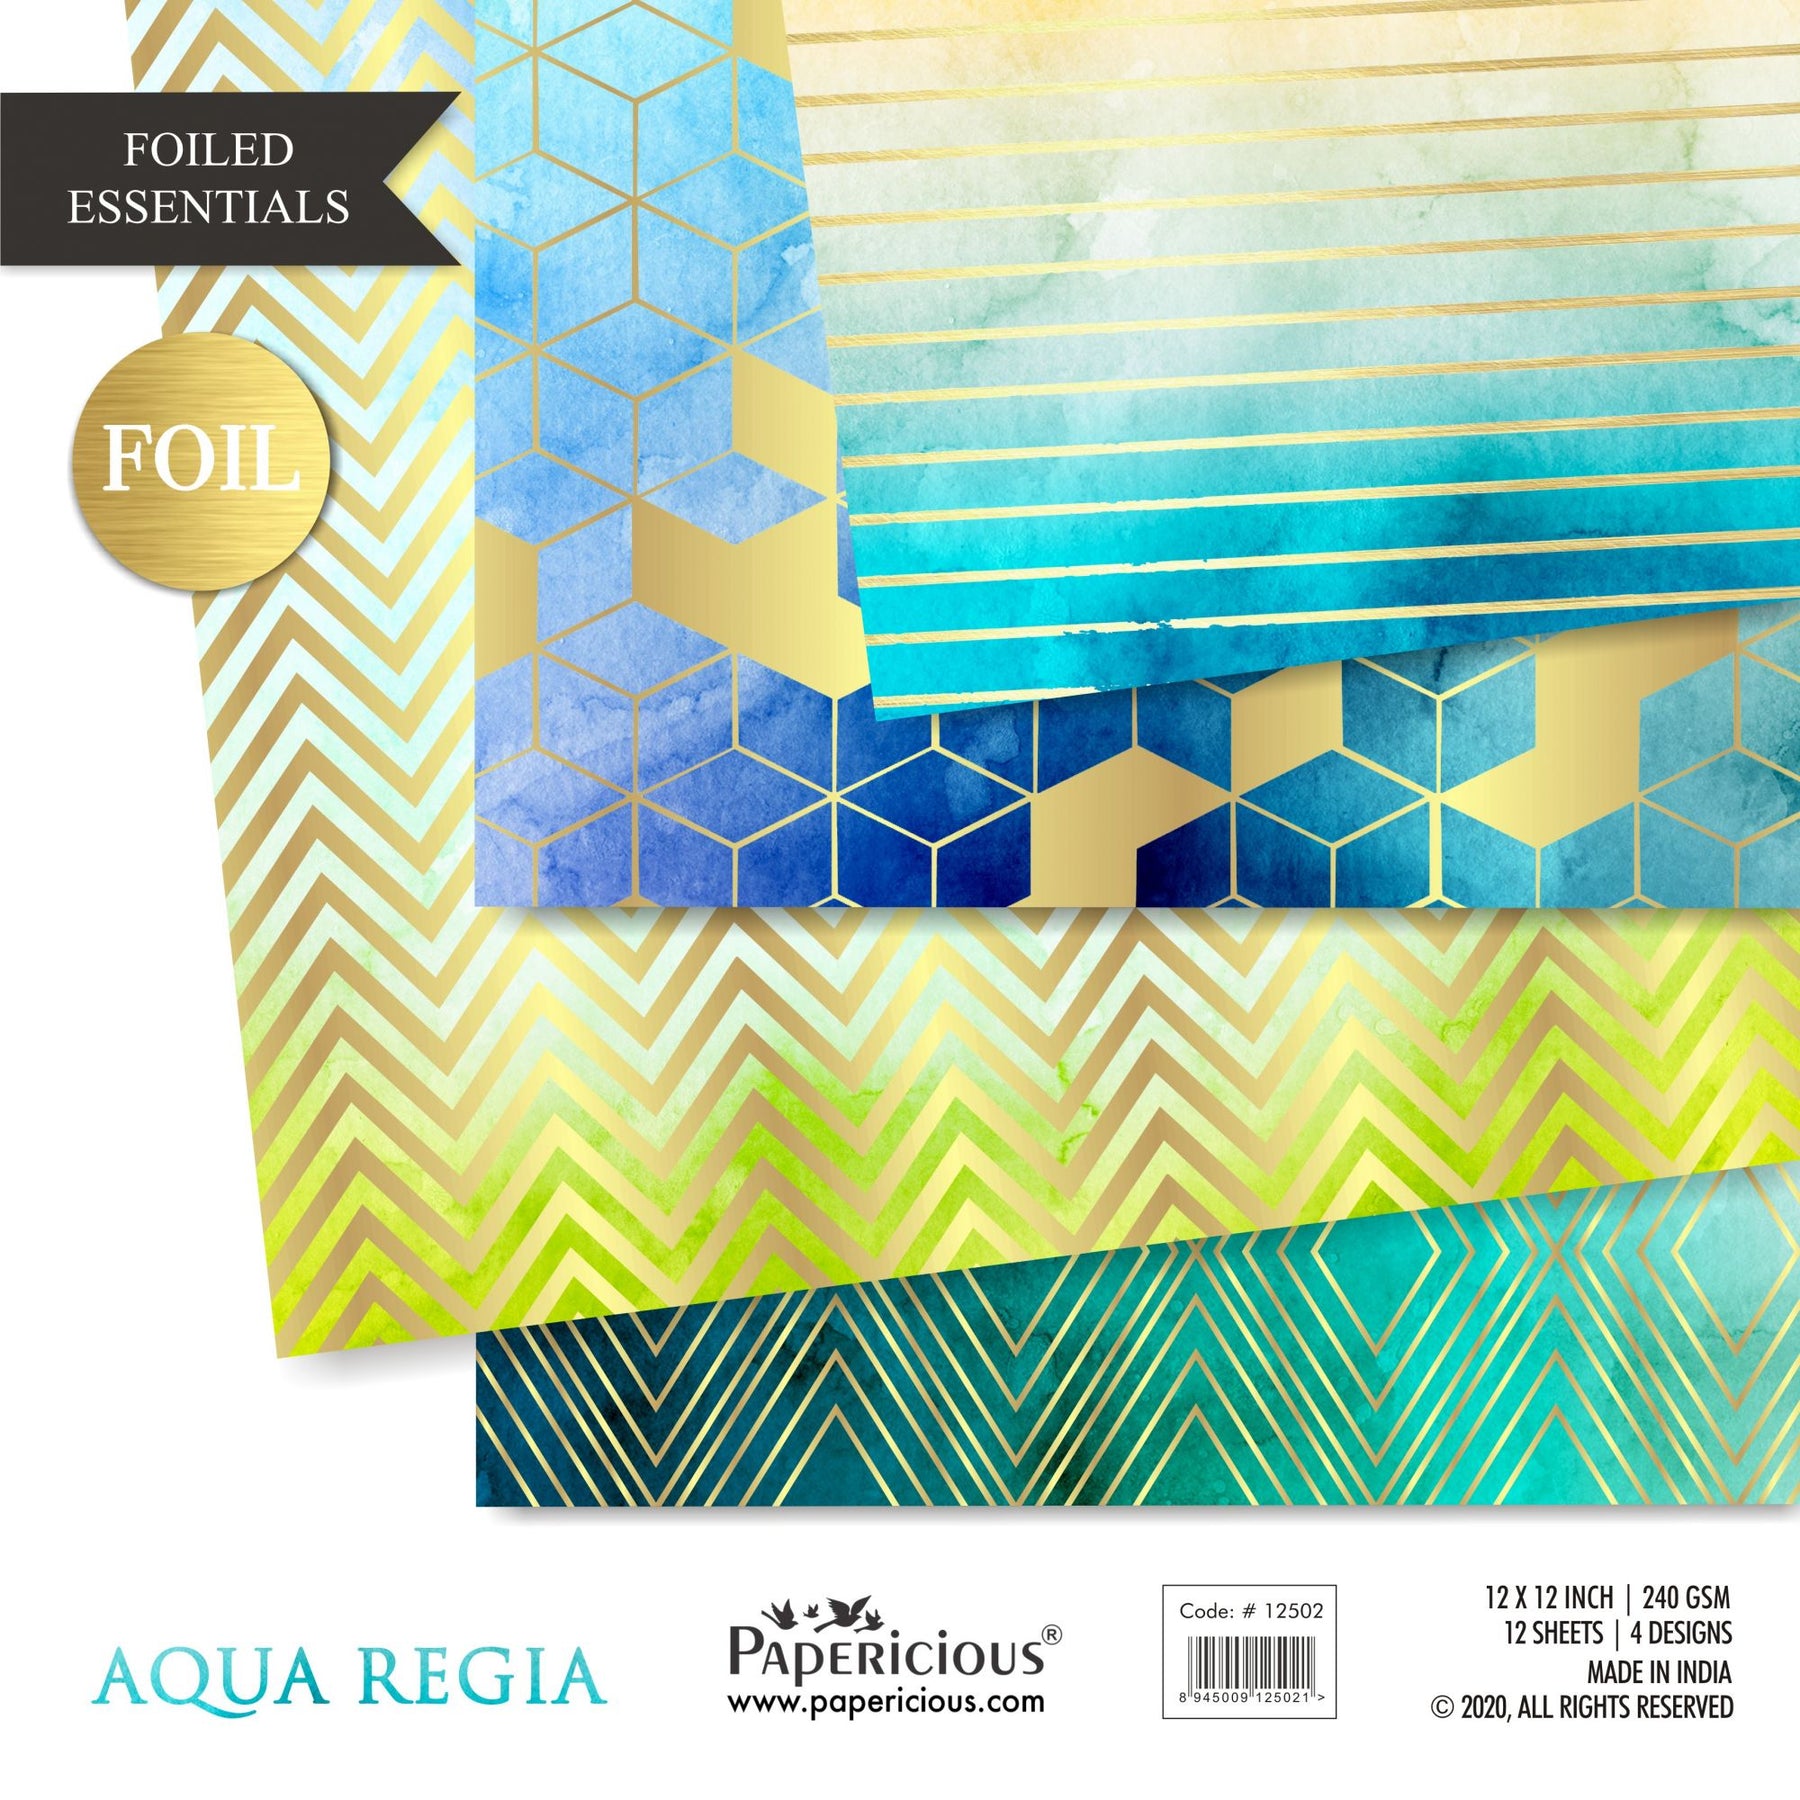 Papericious - Aqua Regia - Golden Foiled Pattern Scrapbook Papers 12x12 inch / 12 sheets